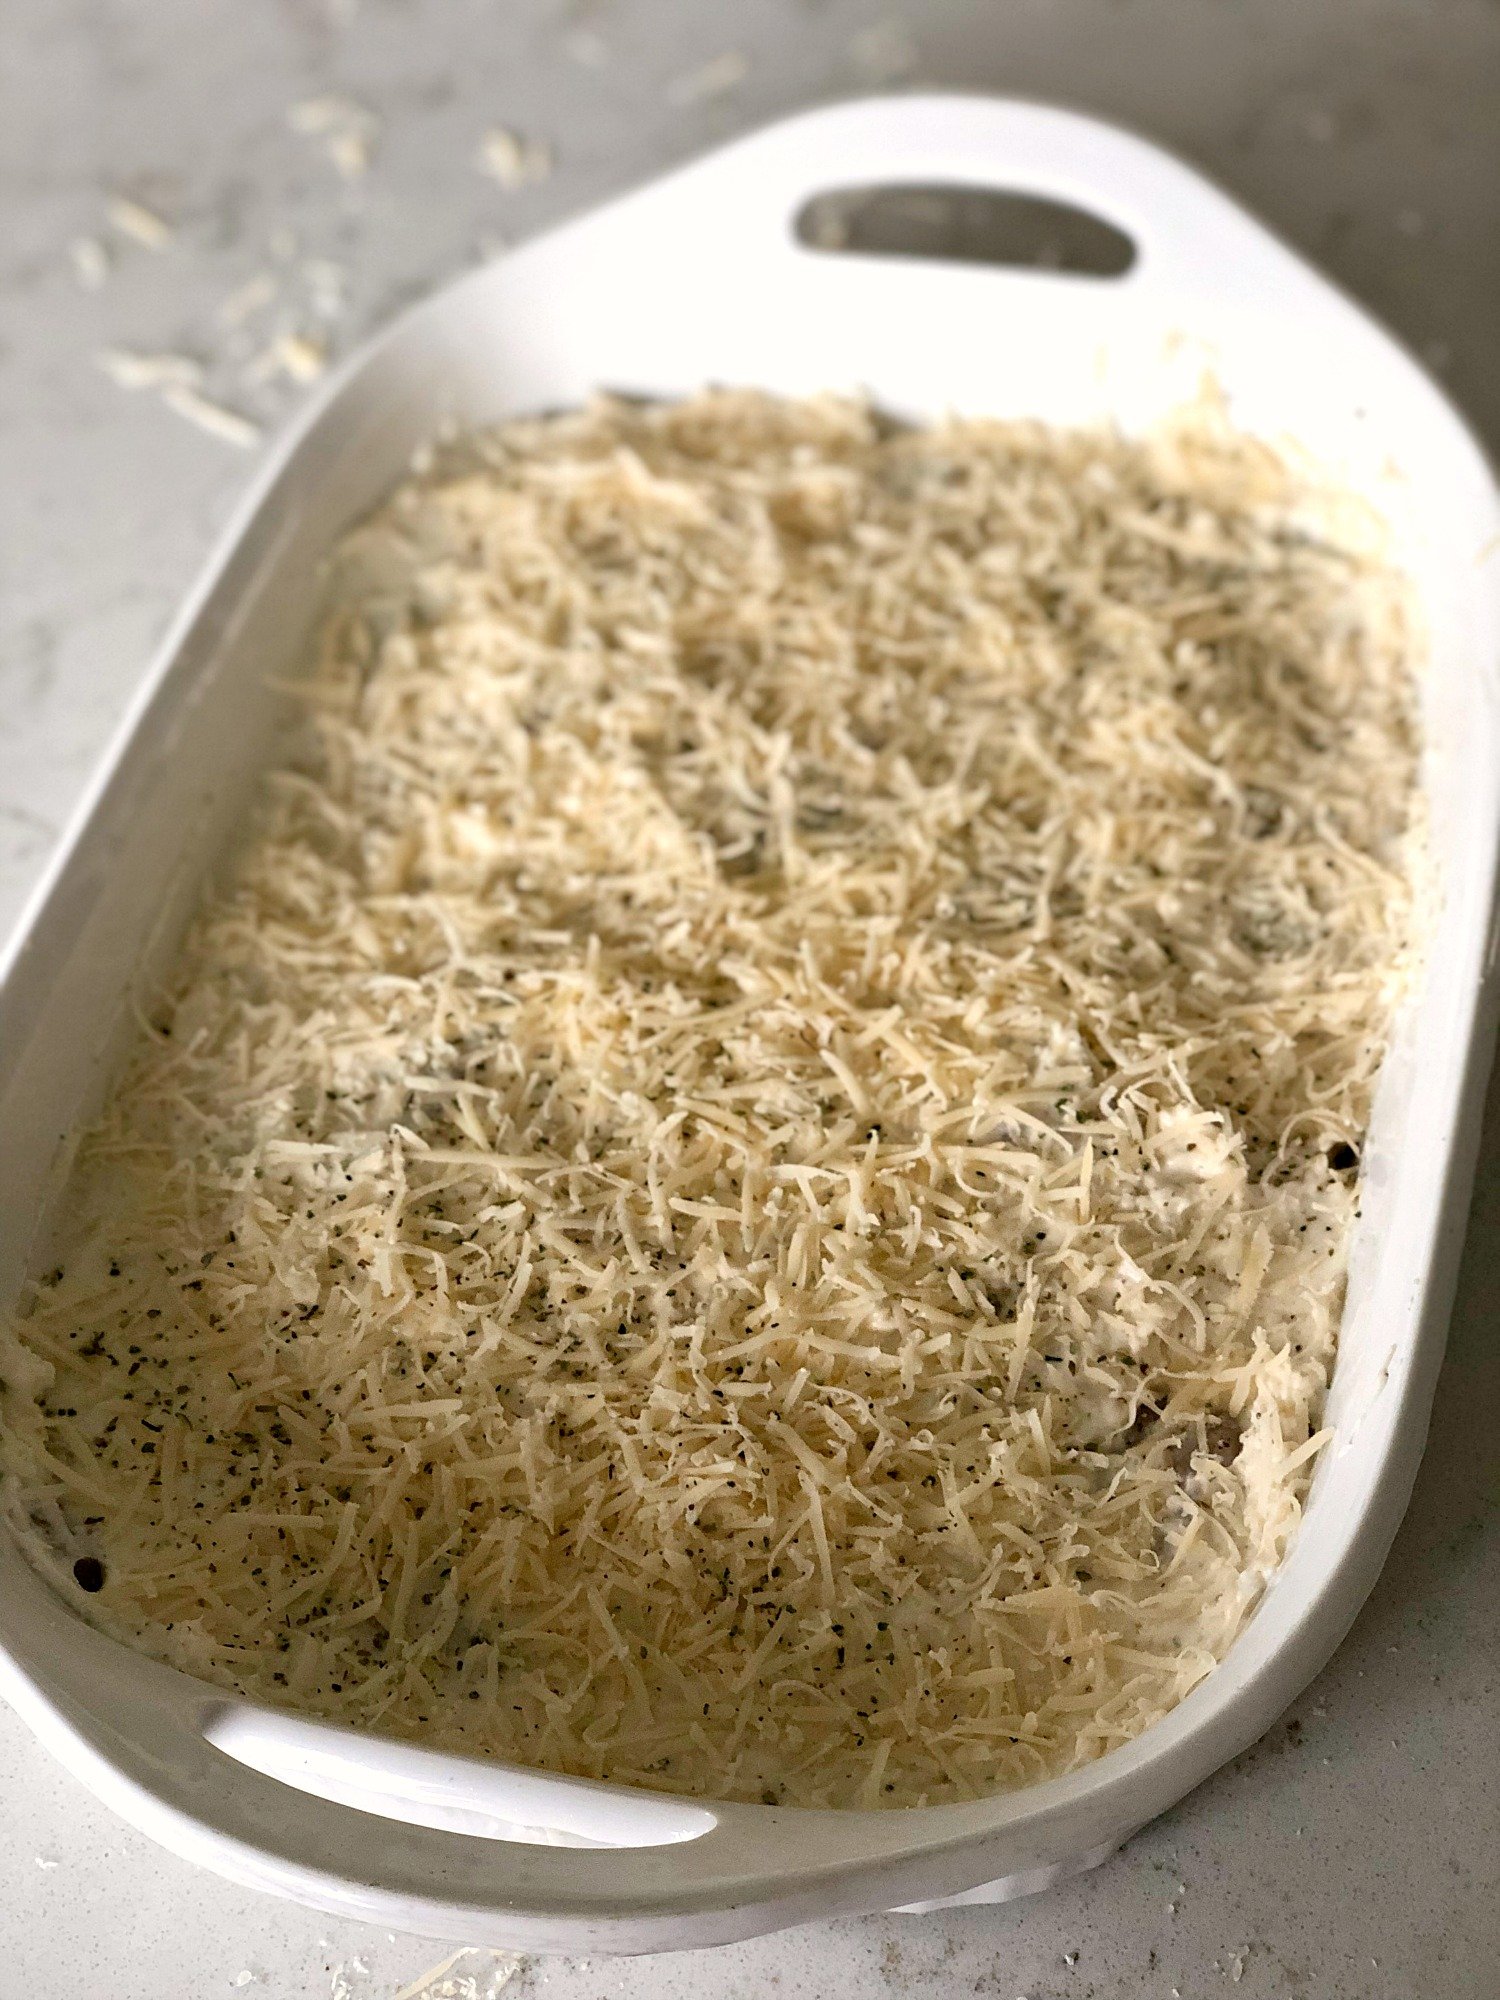 Parmesan Chicken Bake unbaked in a casserole dish